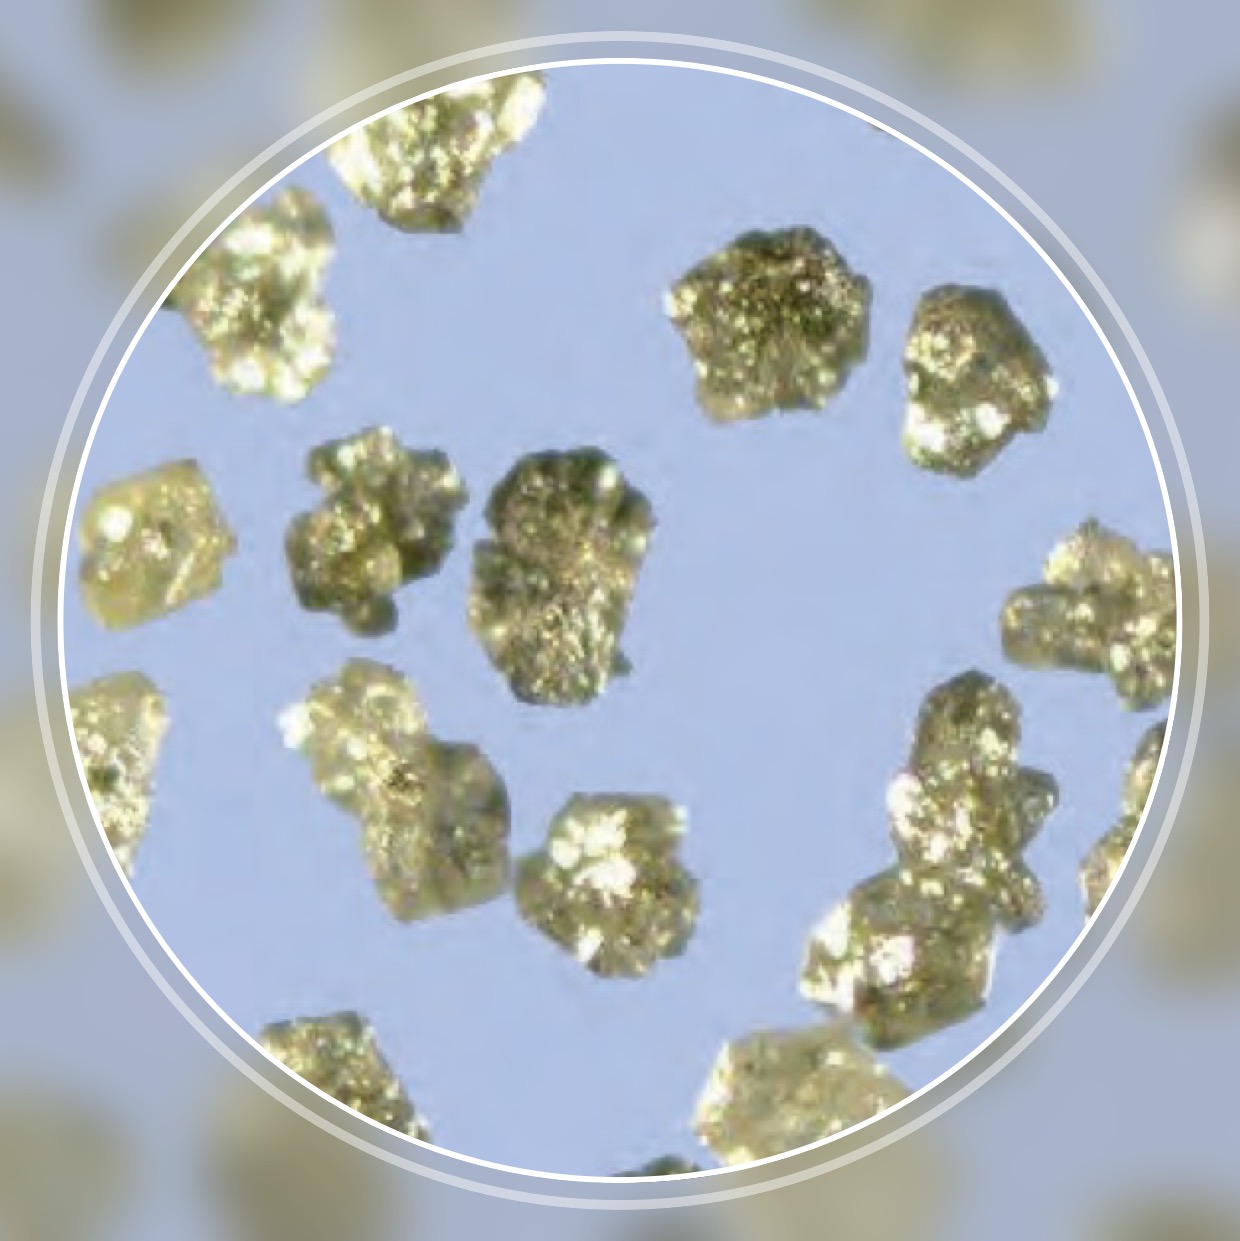 SND-R10 Economy Grade Semi-Blocky Resin Bond Diamond With a High Friability